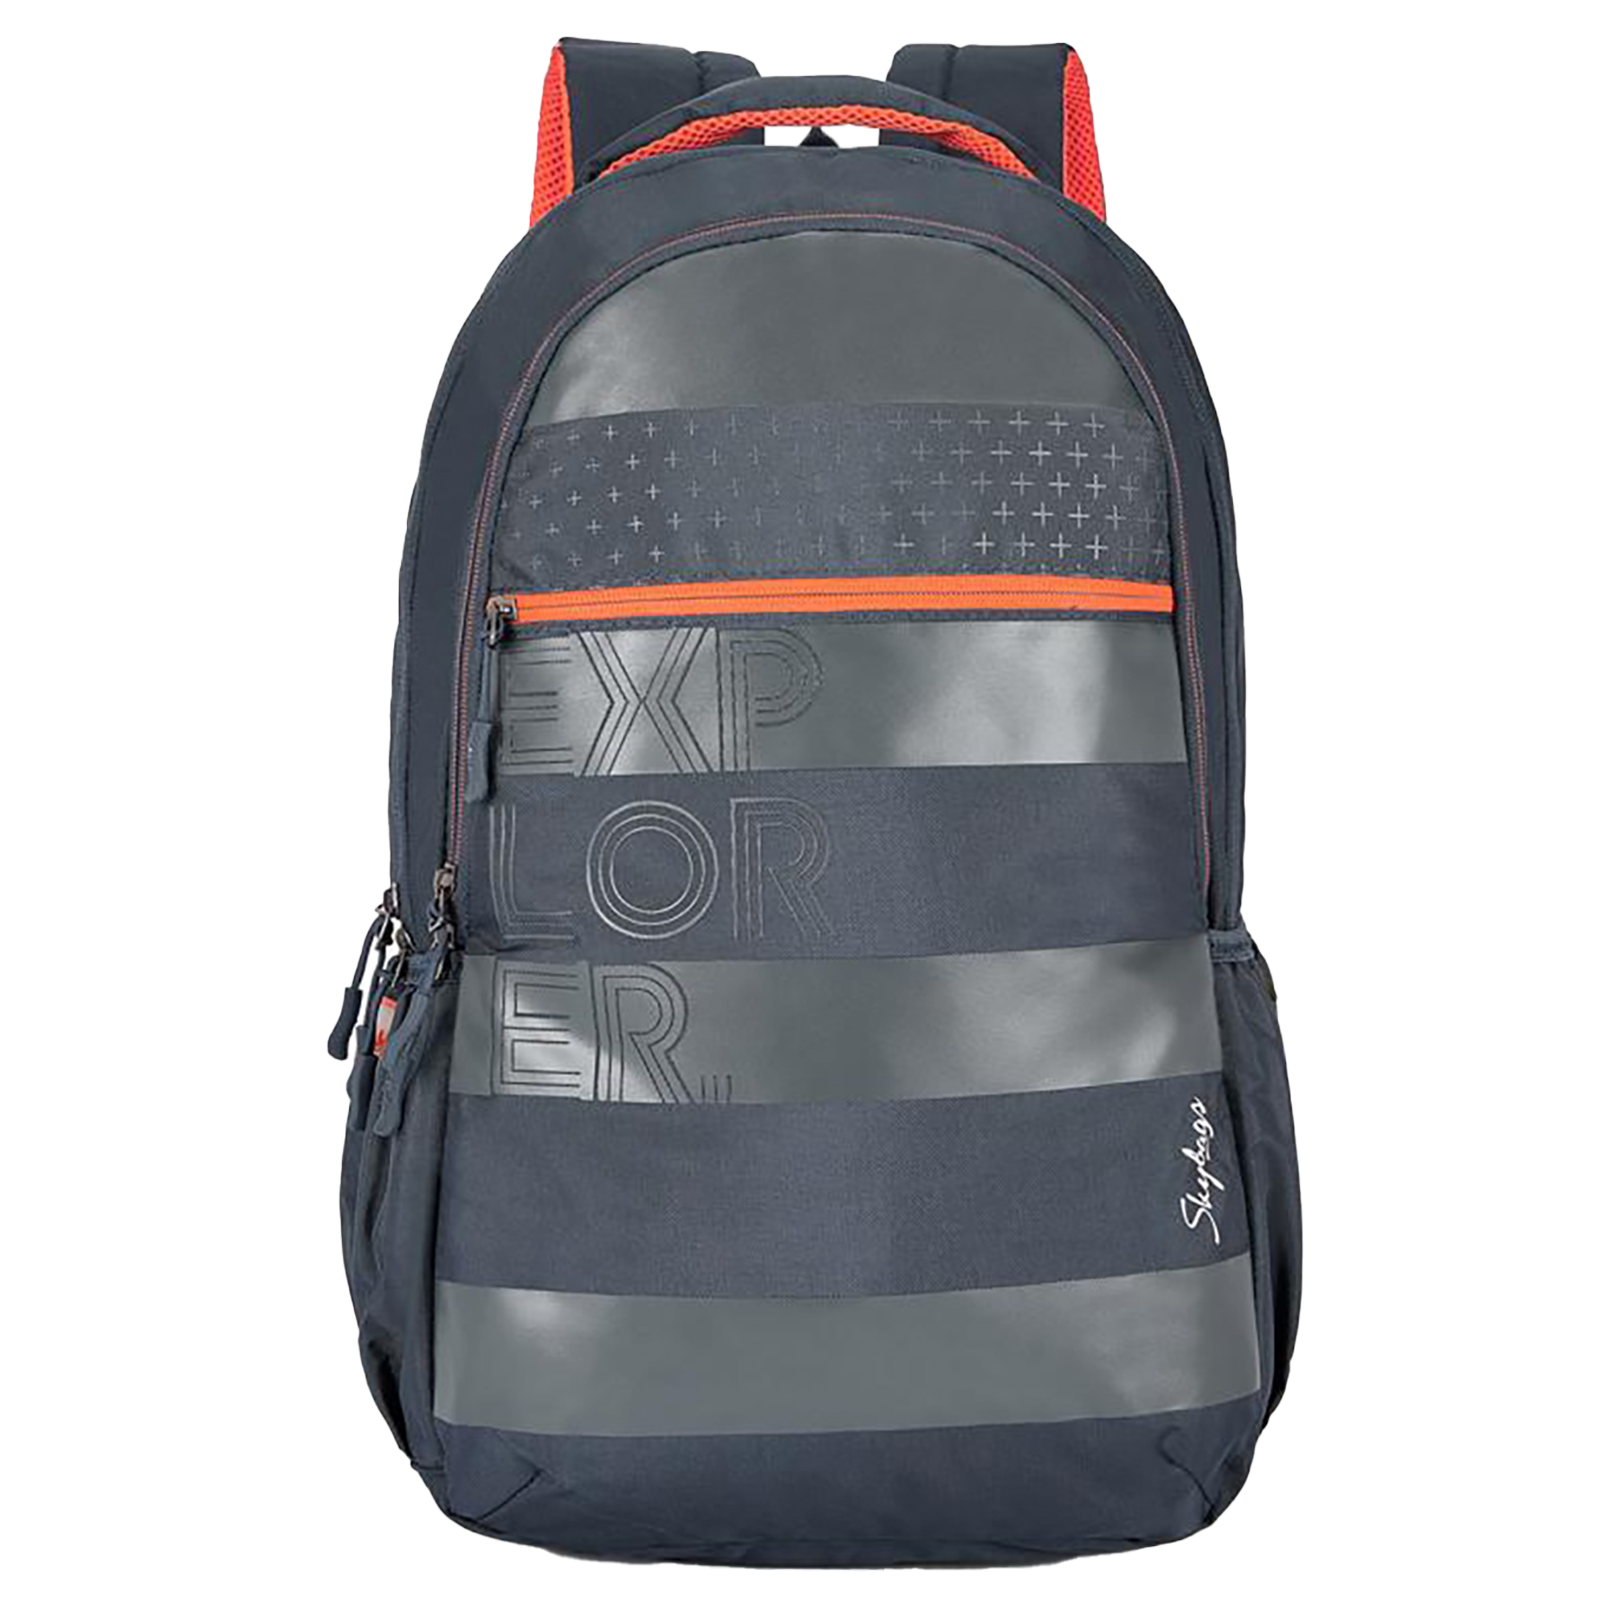 Sky Bags Campus Plus 03 30 Litres Gucci Fabric Backpack for 17 Inch Laptop (Rain Cover, LPBPCAP3BLK, Black)_1